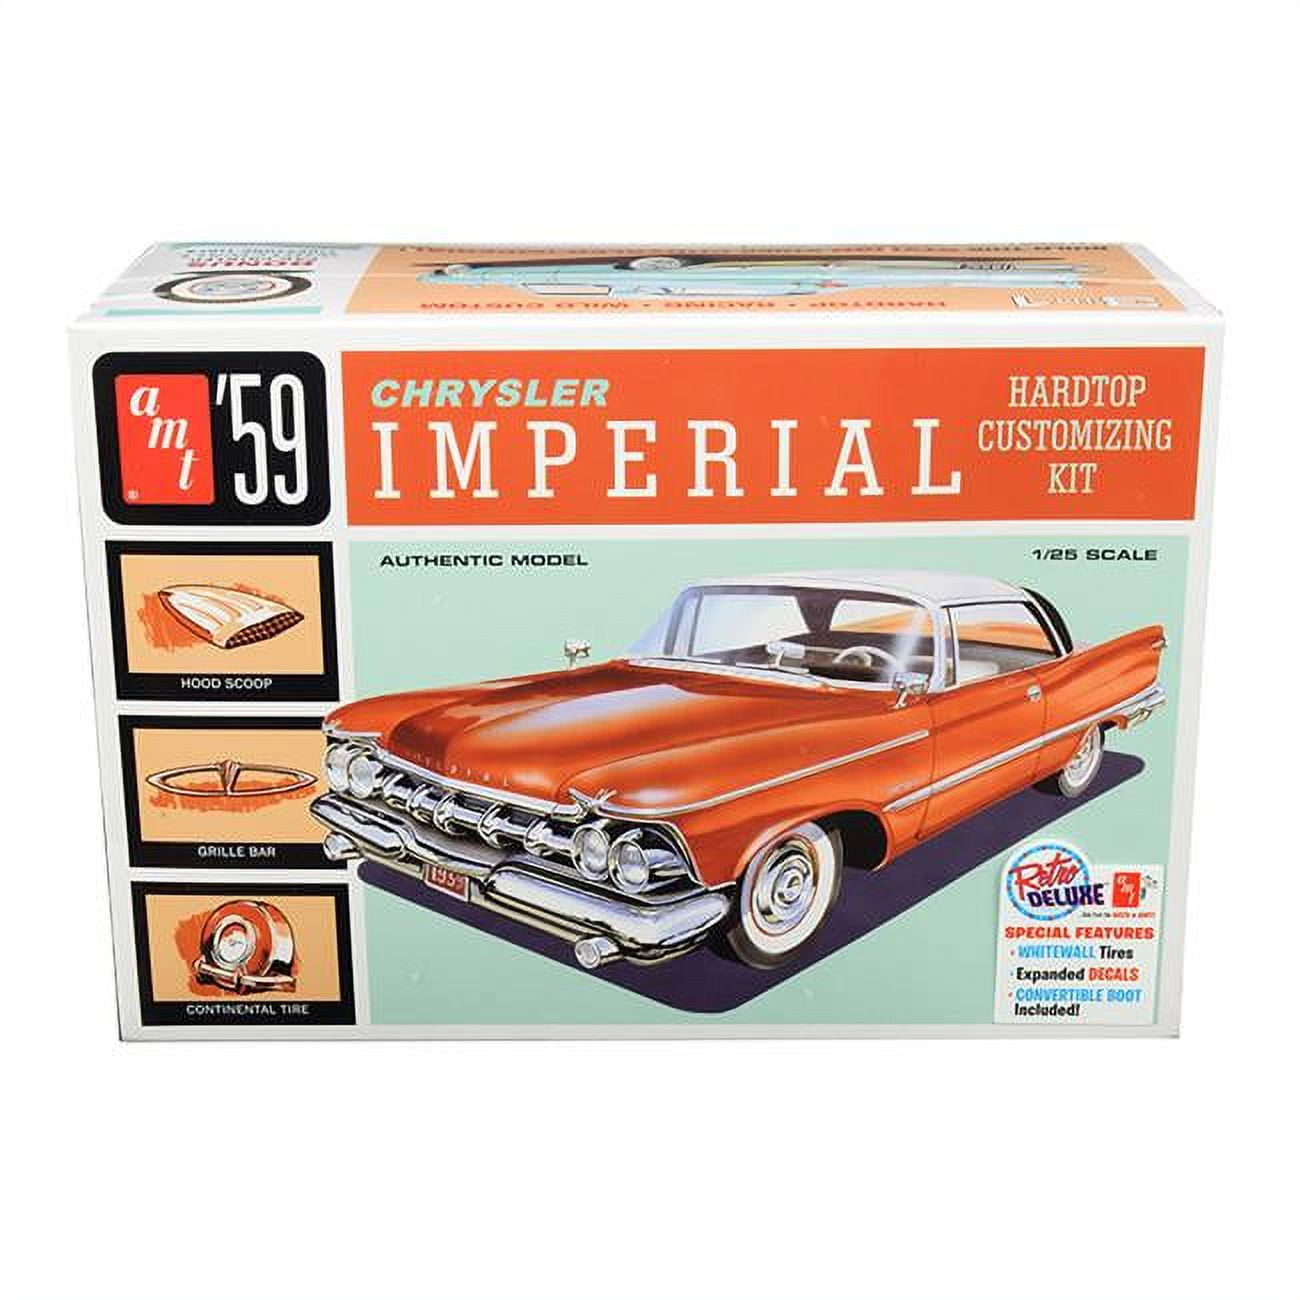 1136 Skill 2 Model Kit 1959 Chrysler Imperial 3 In 1 Kit 1 By 25 Scale Model